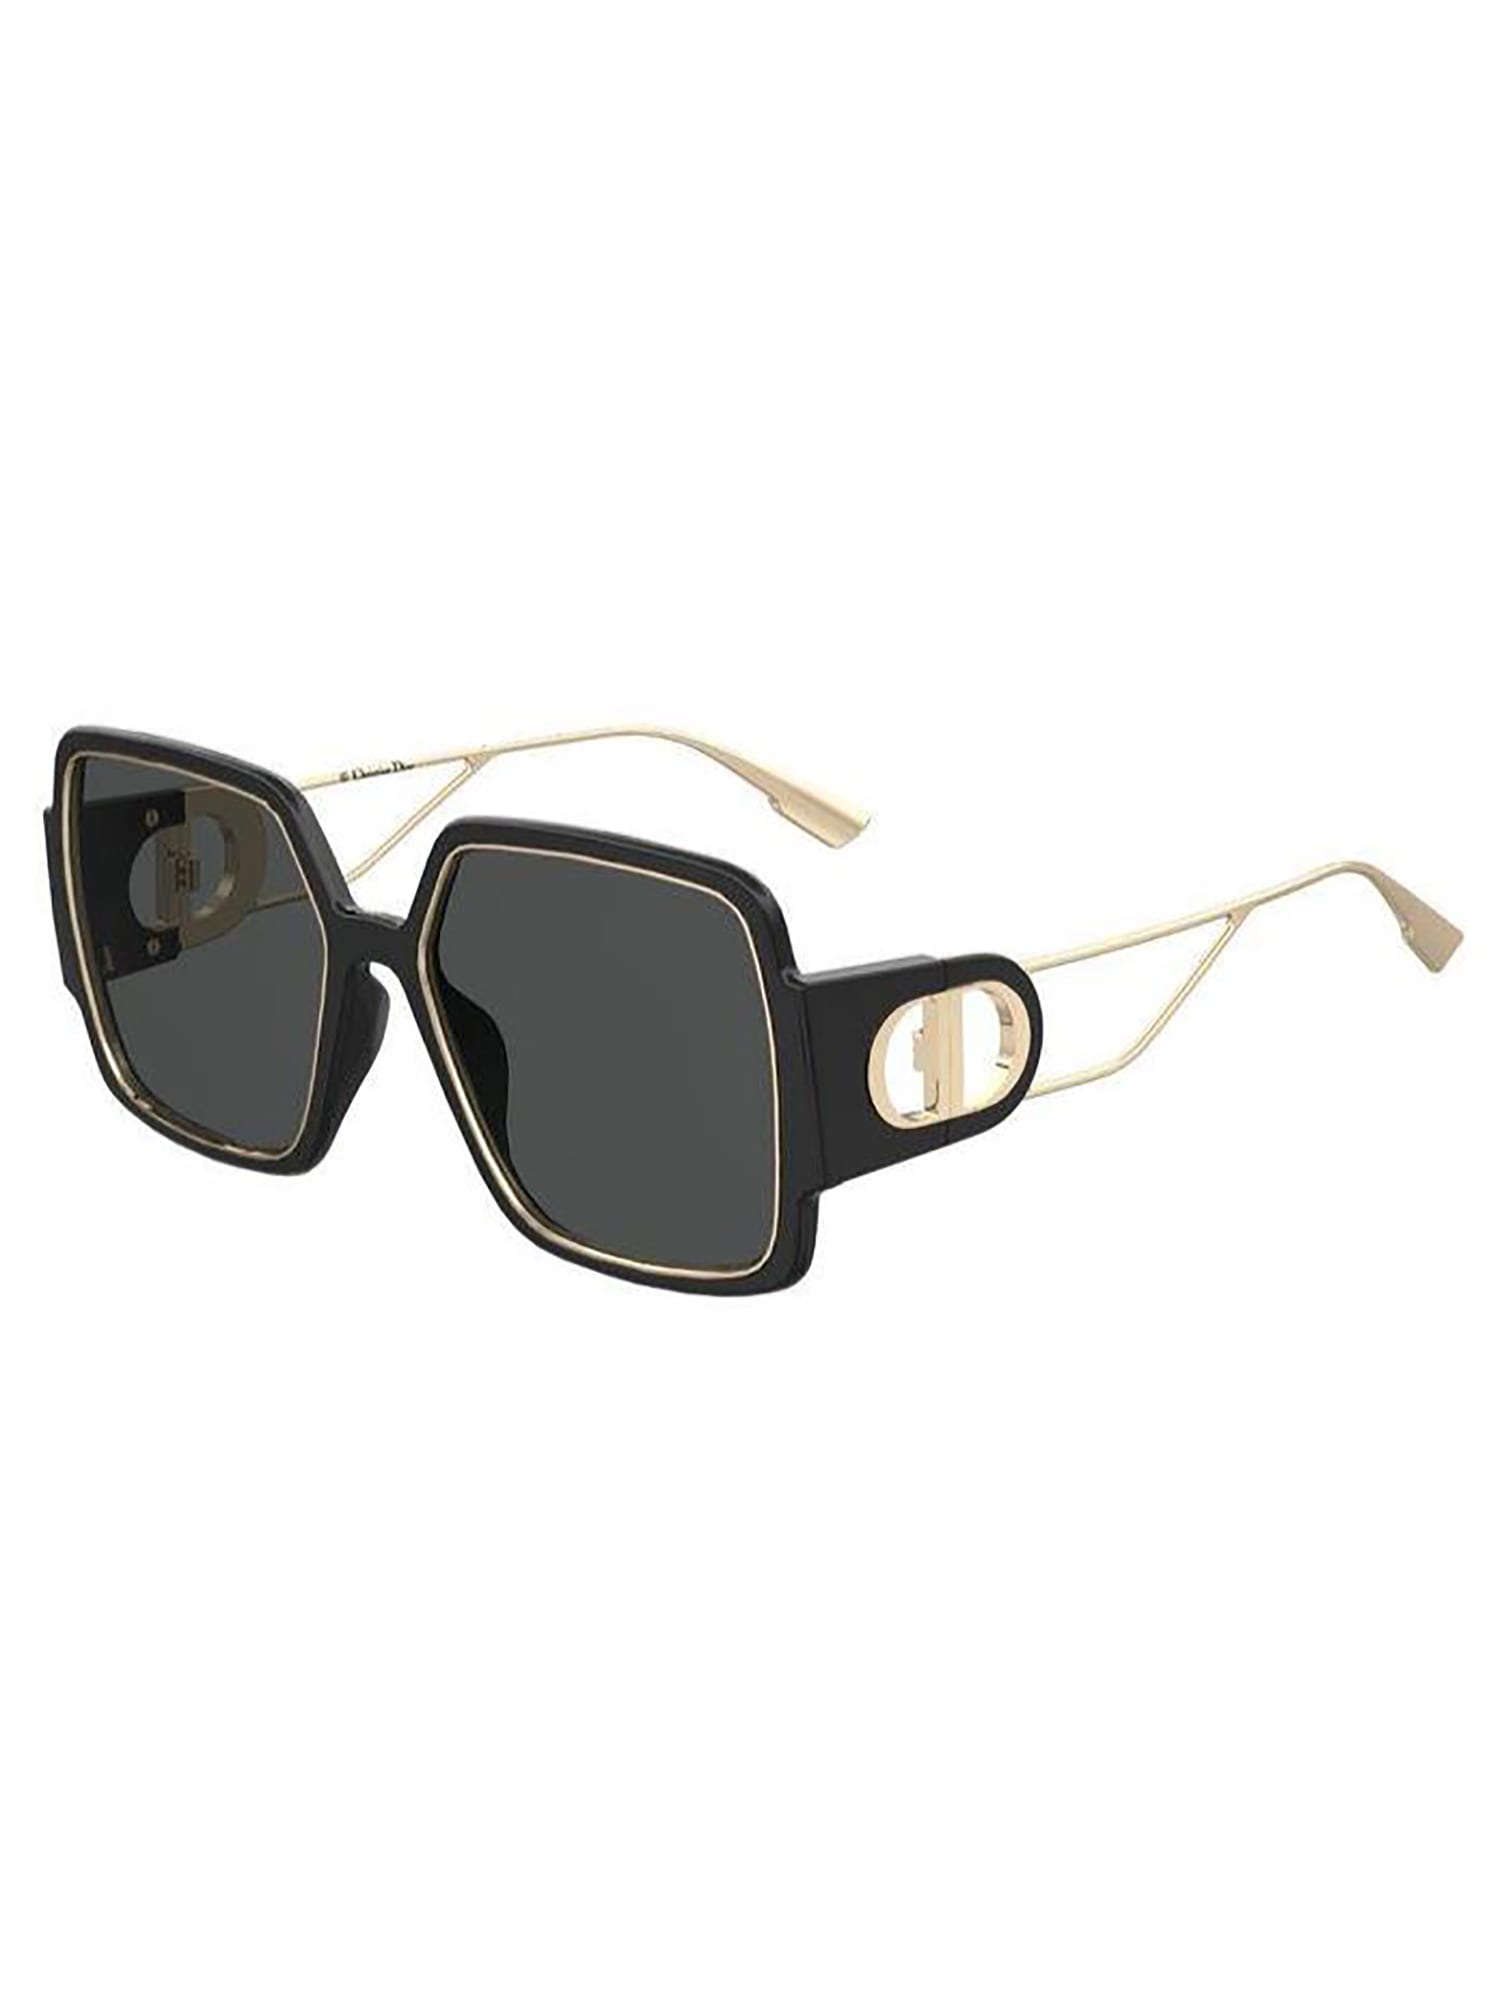 Christian Dior 30MONTAIGNE2 Sunglasses